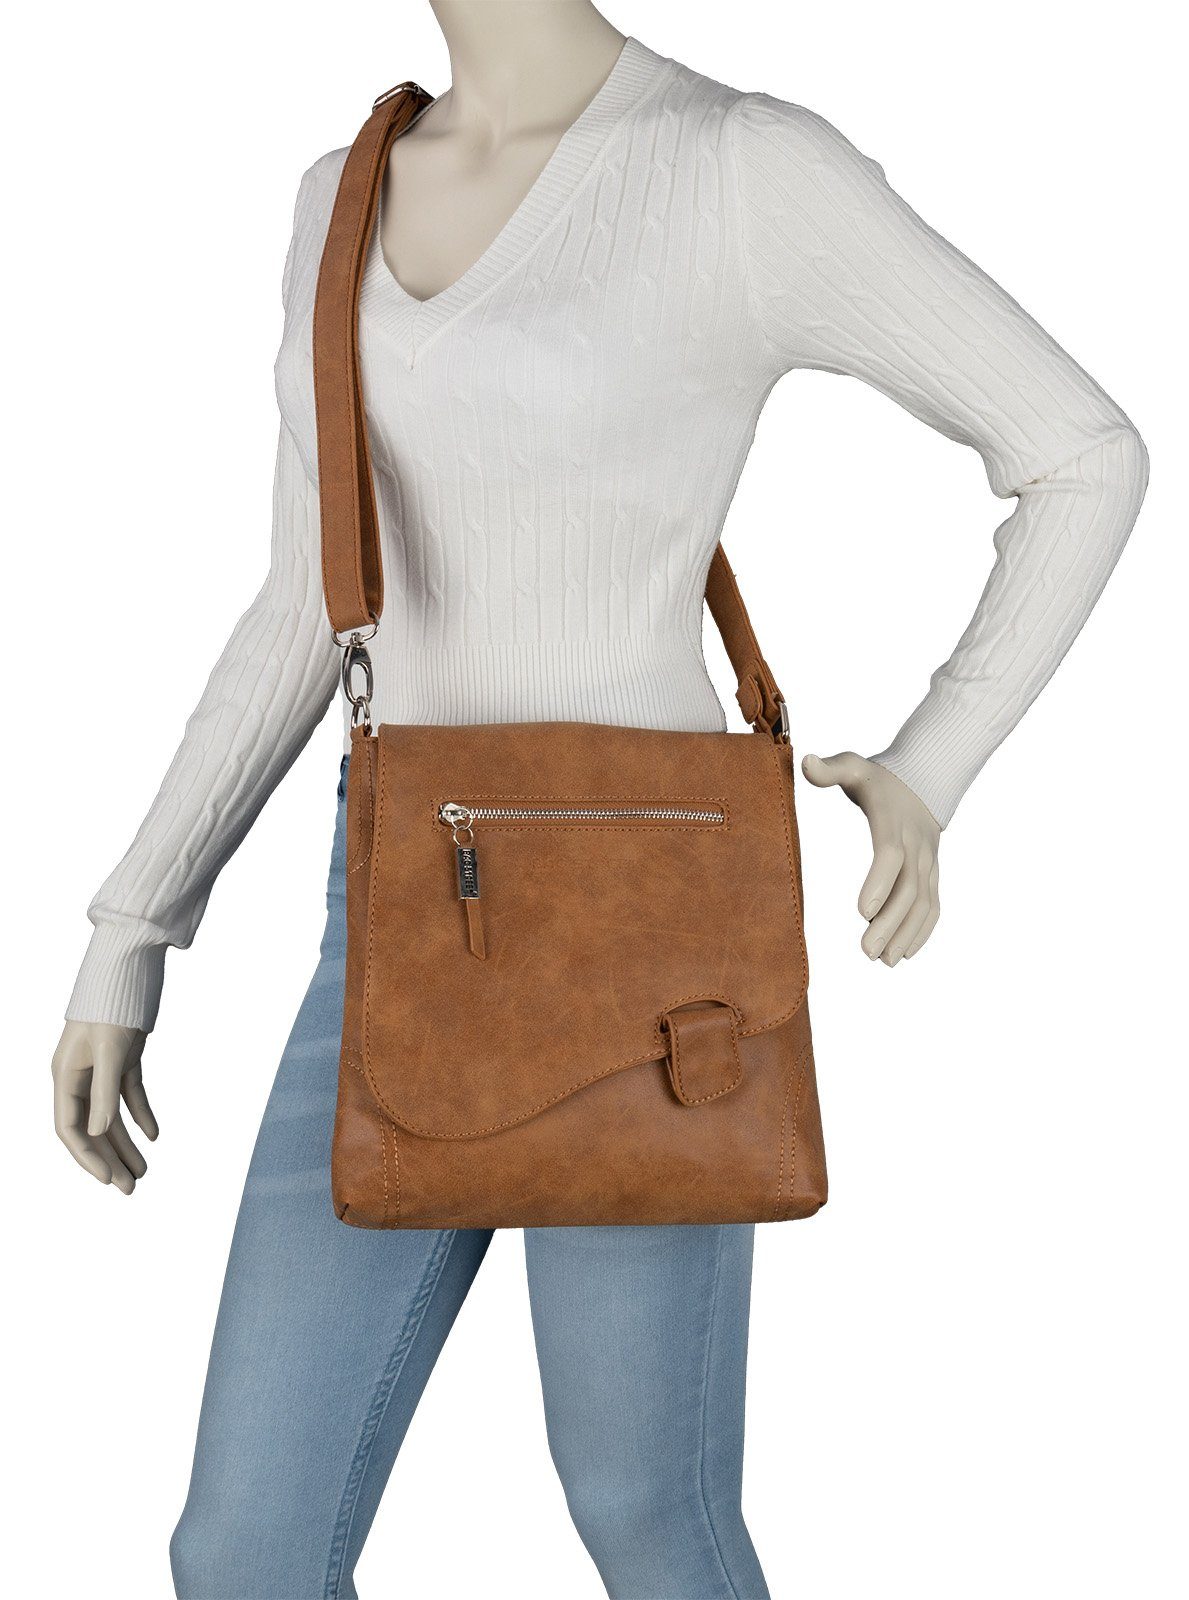 Damentasche Street als Bag COGNAC T0104, Handtasche BAG Schlüsseltasche Schultertasche STREET Schultertasche, tragbar Umhängetasche Umhängetasche